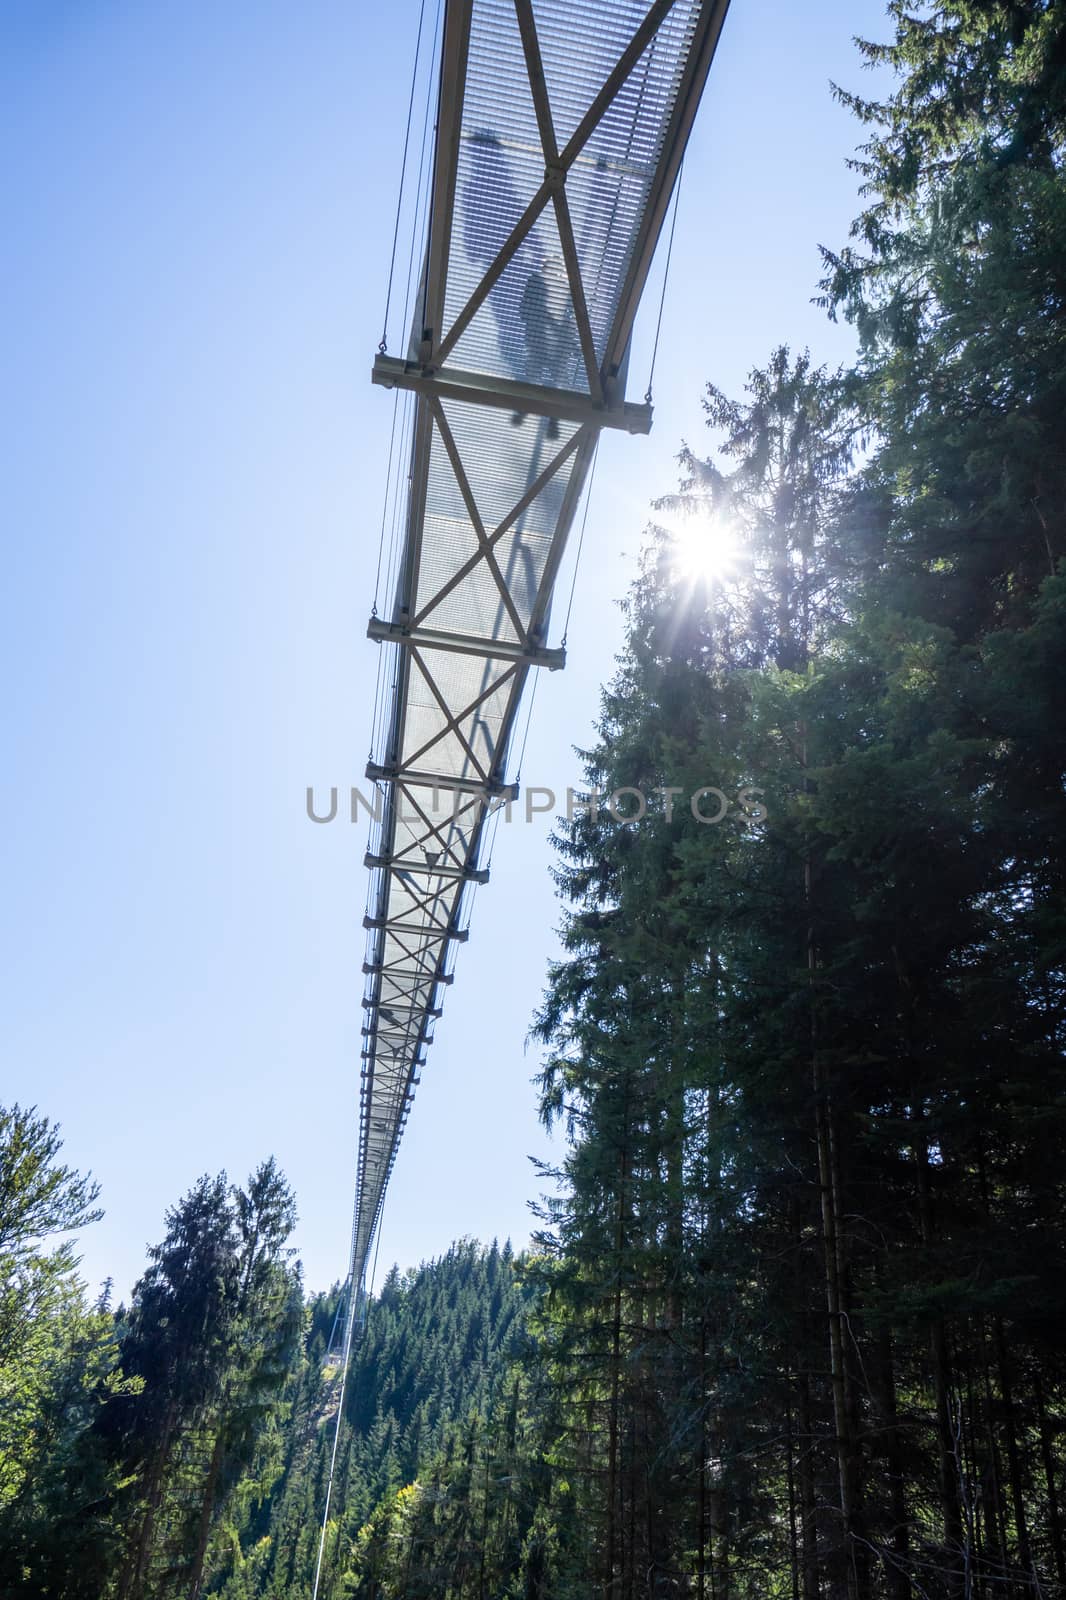 cable bridge at Bad Wildbad south Germany by magann